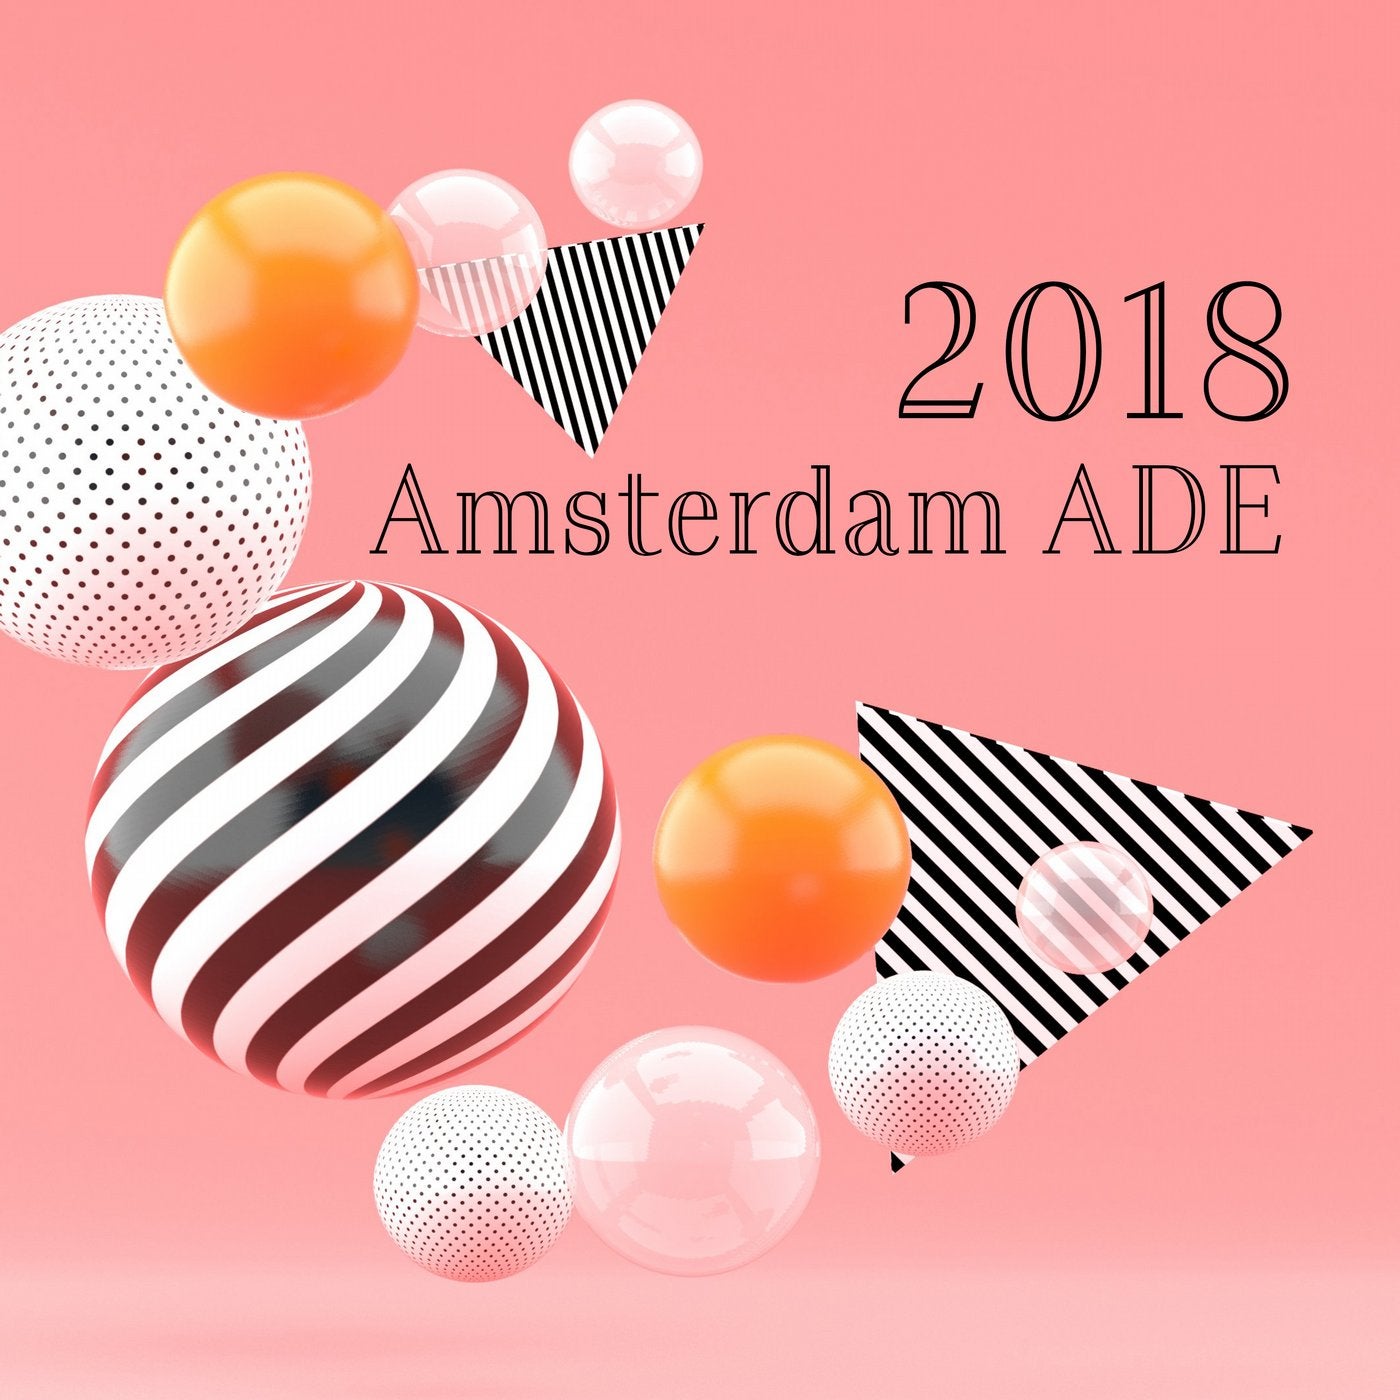 Amsterdam ADE 2018